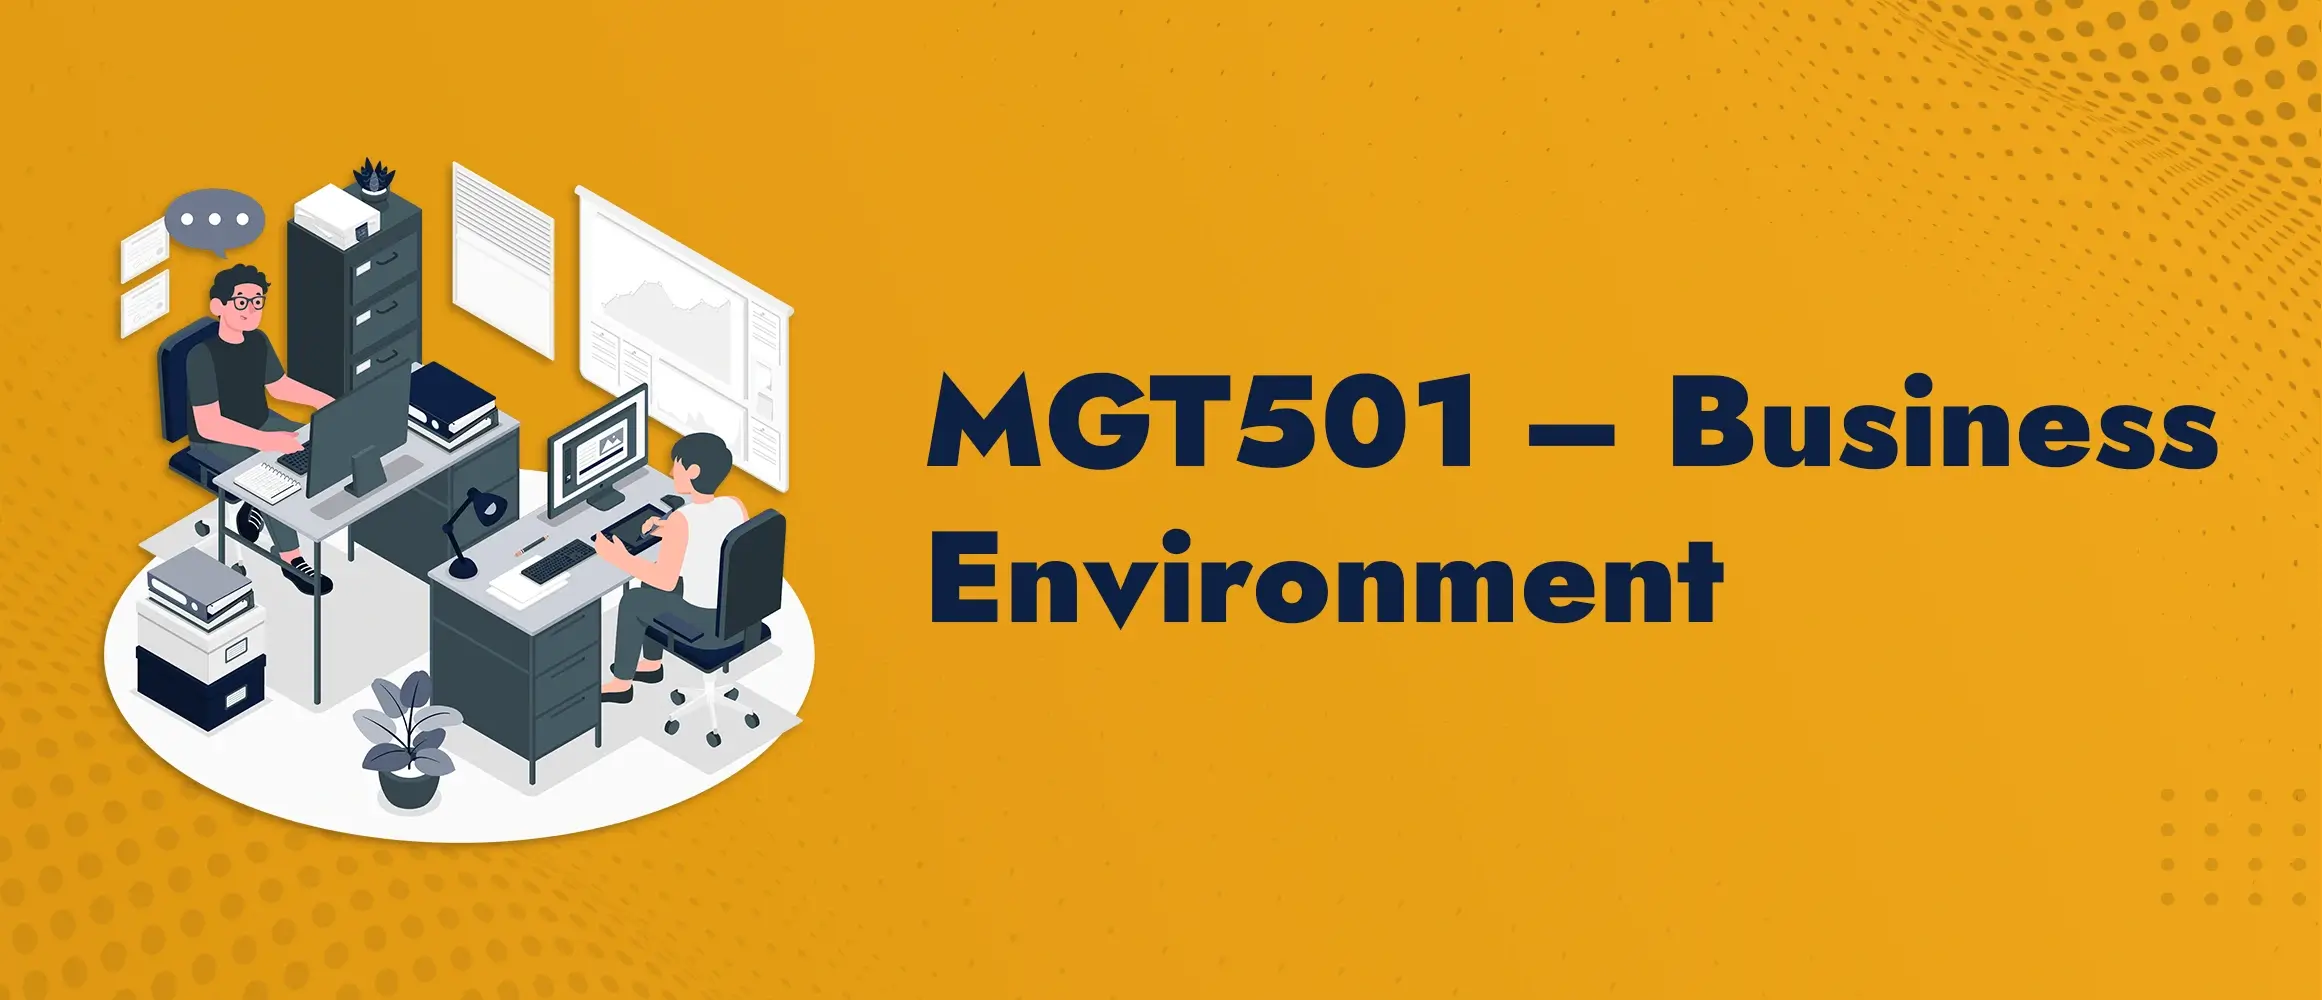 MGT501 Business Environment